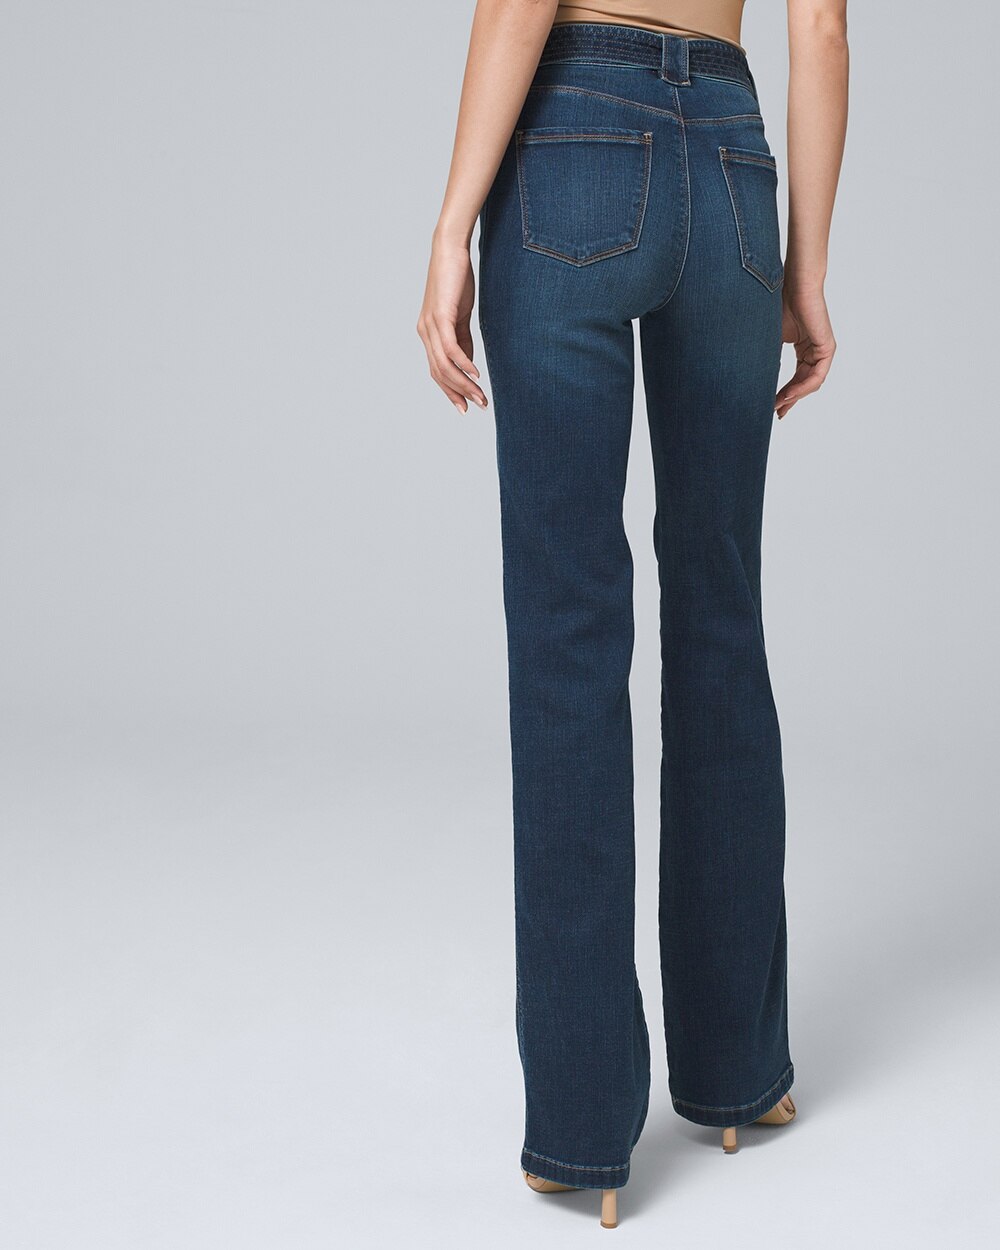 High-Rise Everyday Soft Denim\u2122 Flare Jeans - White House Black Market